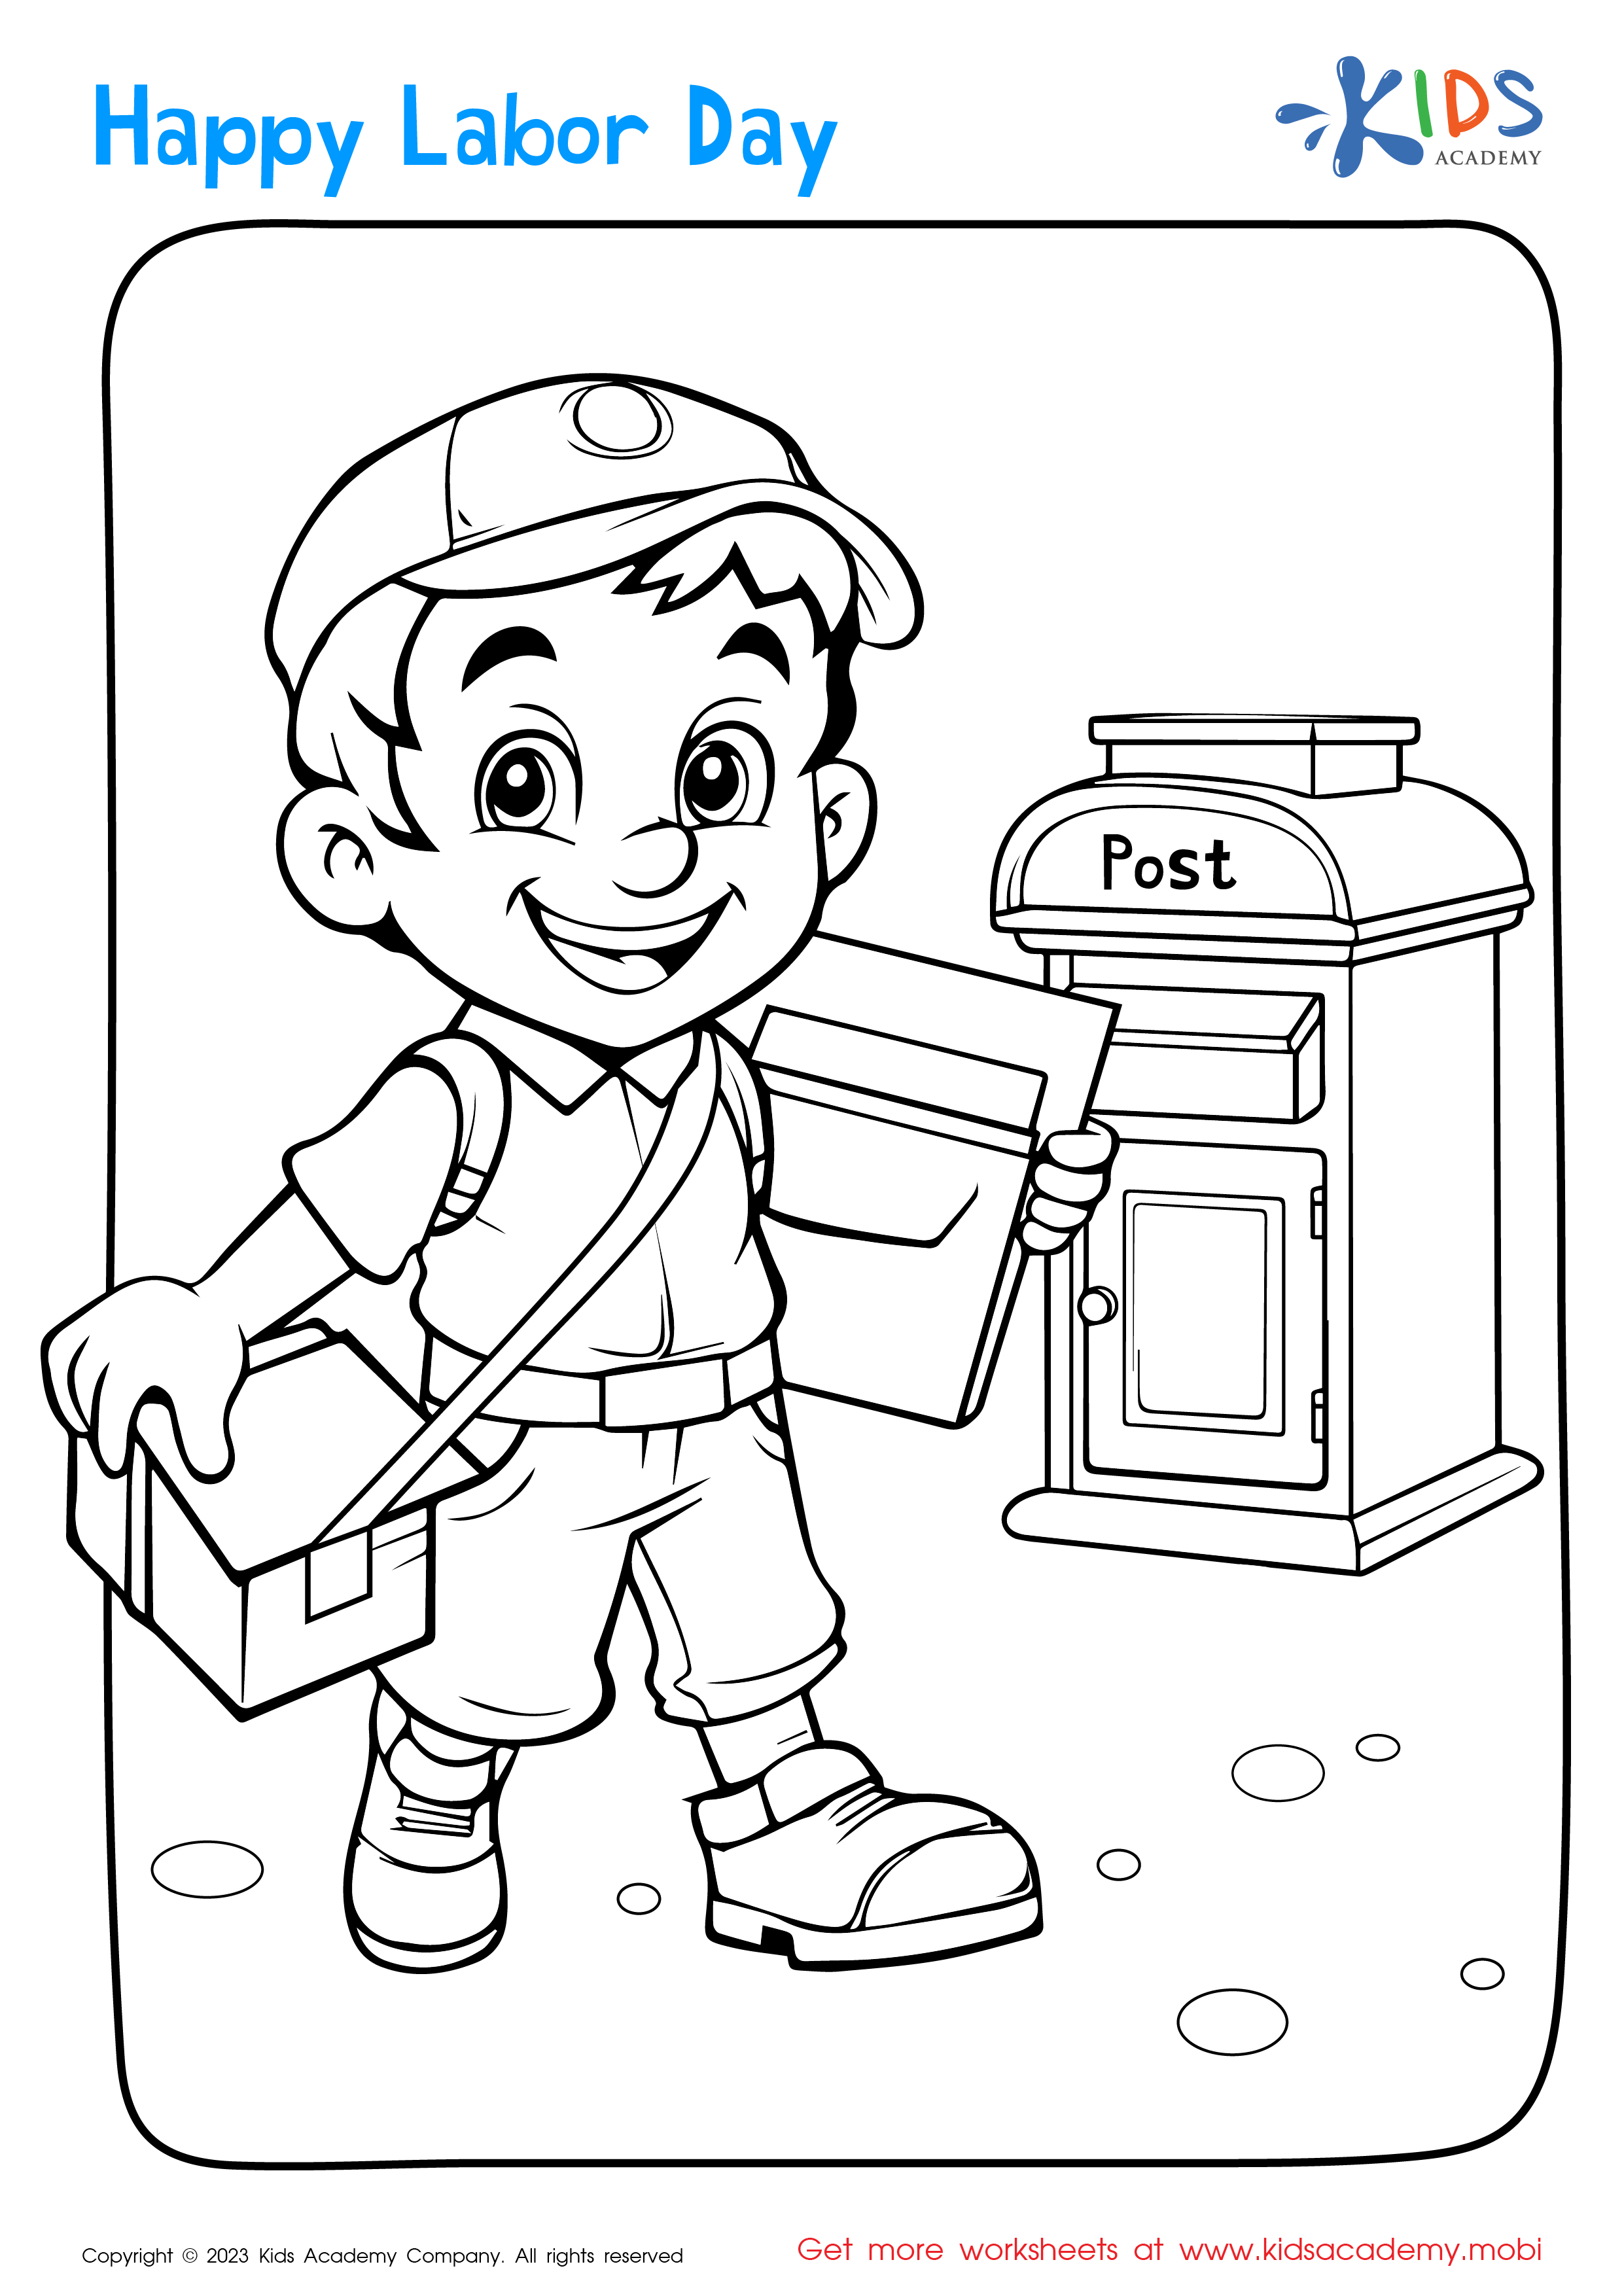 Labor Day: Postman